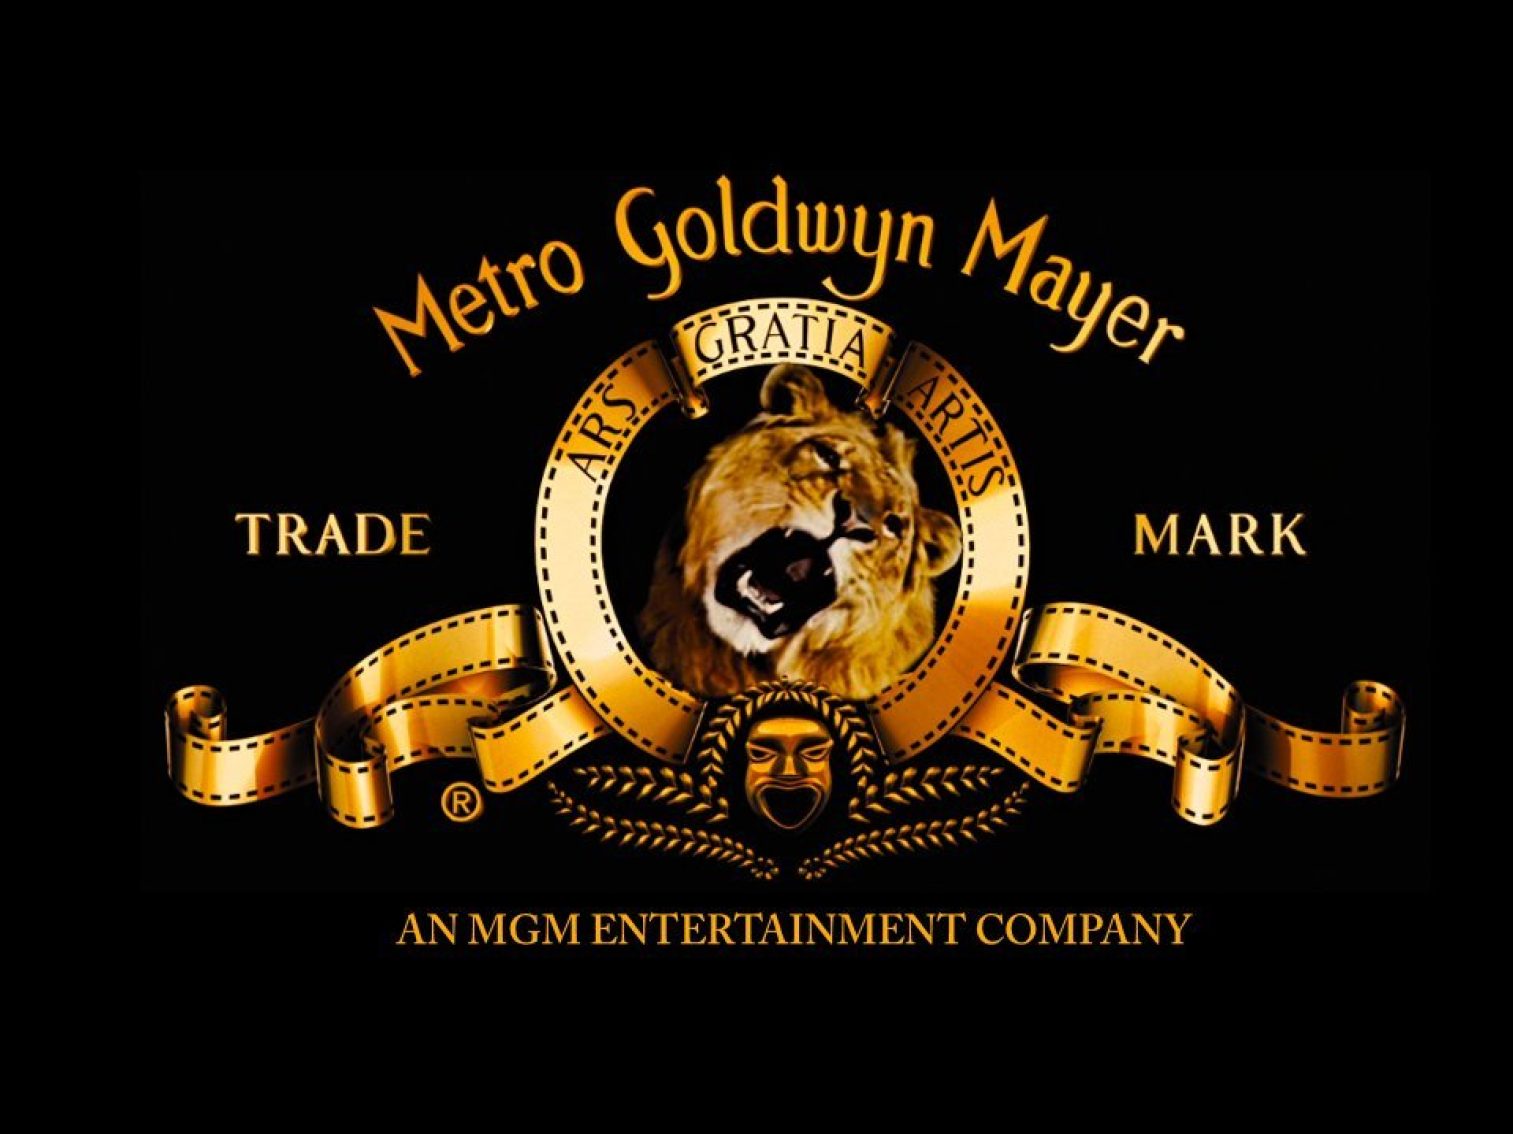 Mgm Logo